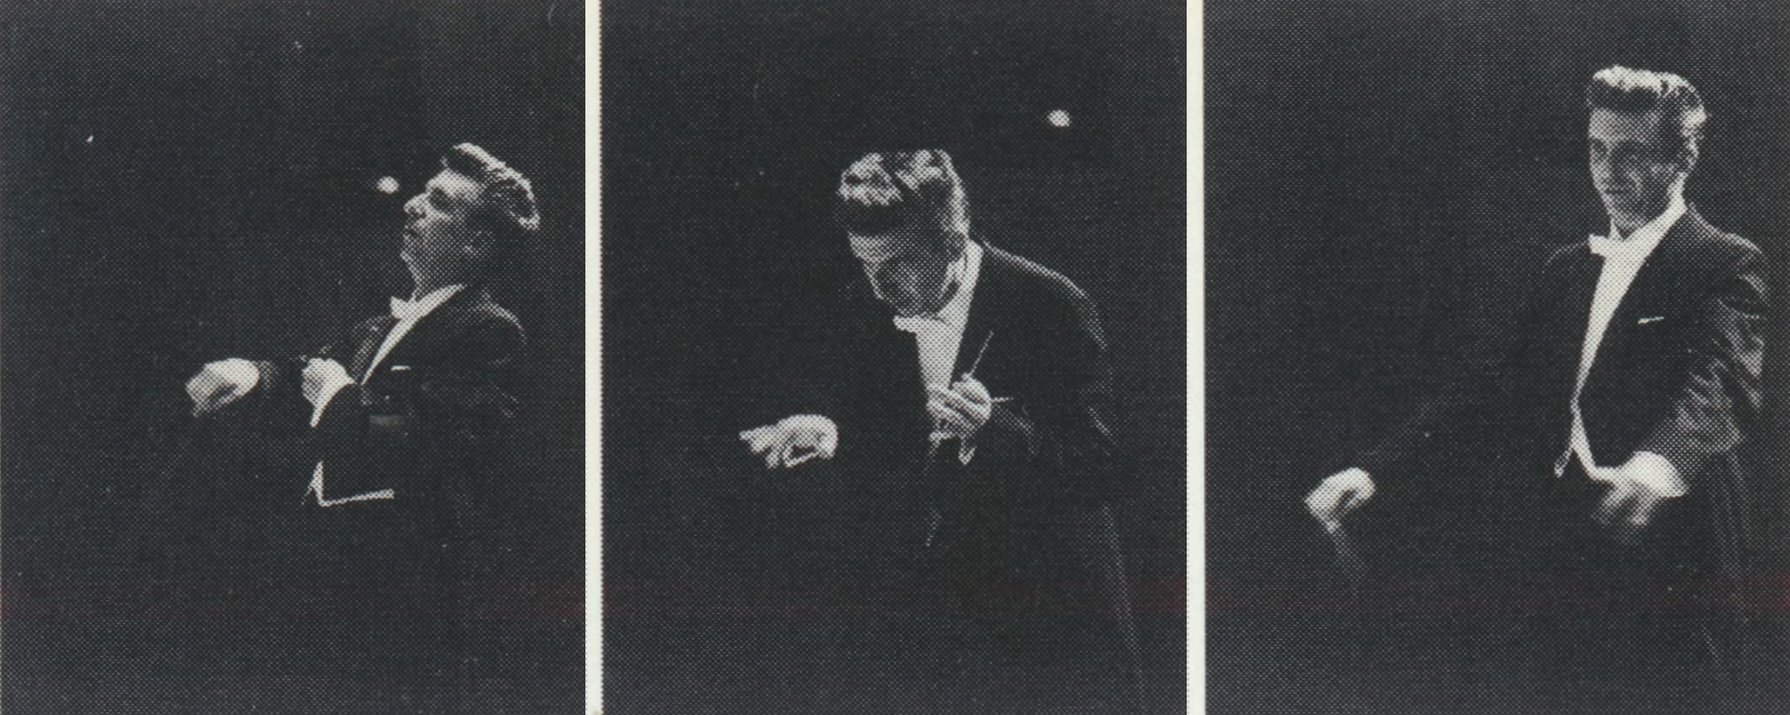 Peter MAAG, photo de presse de Decca, date, lieu et photographe inconnus